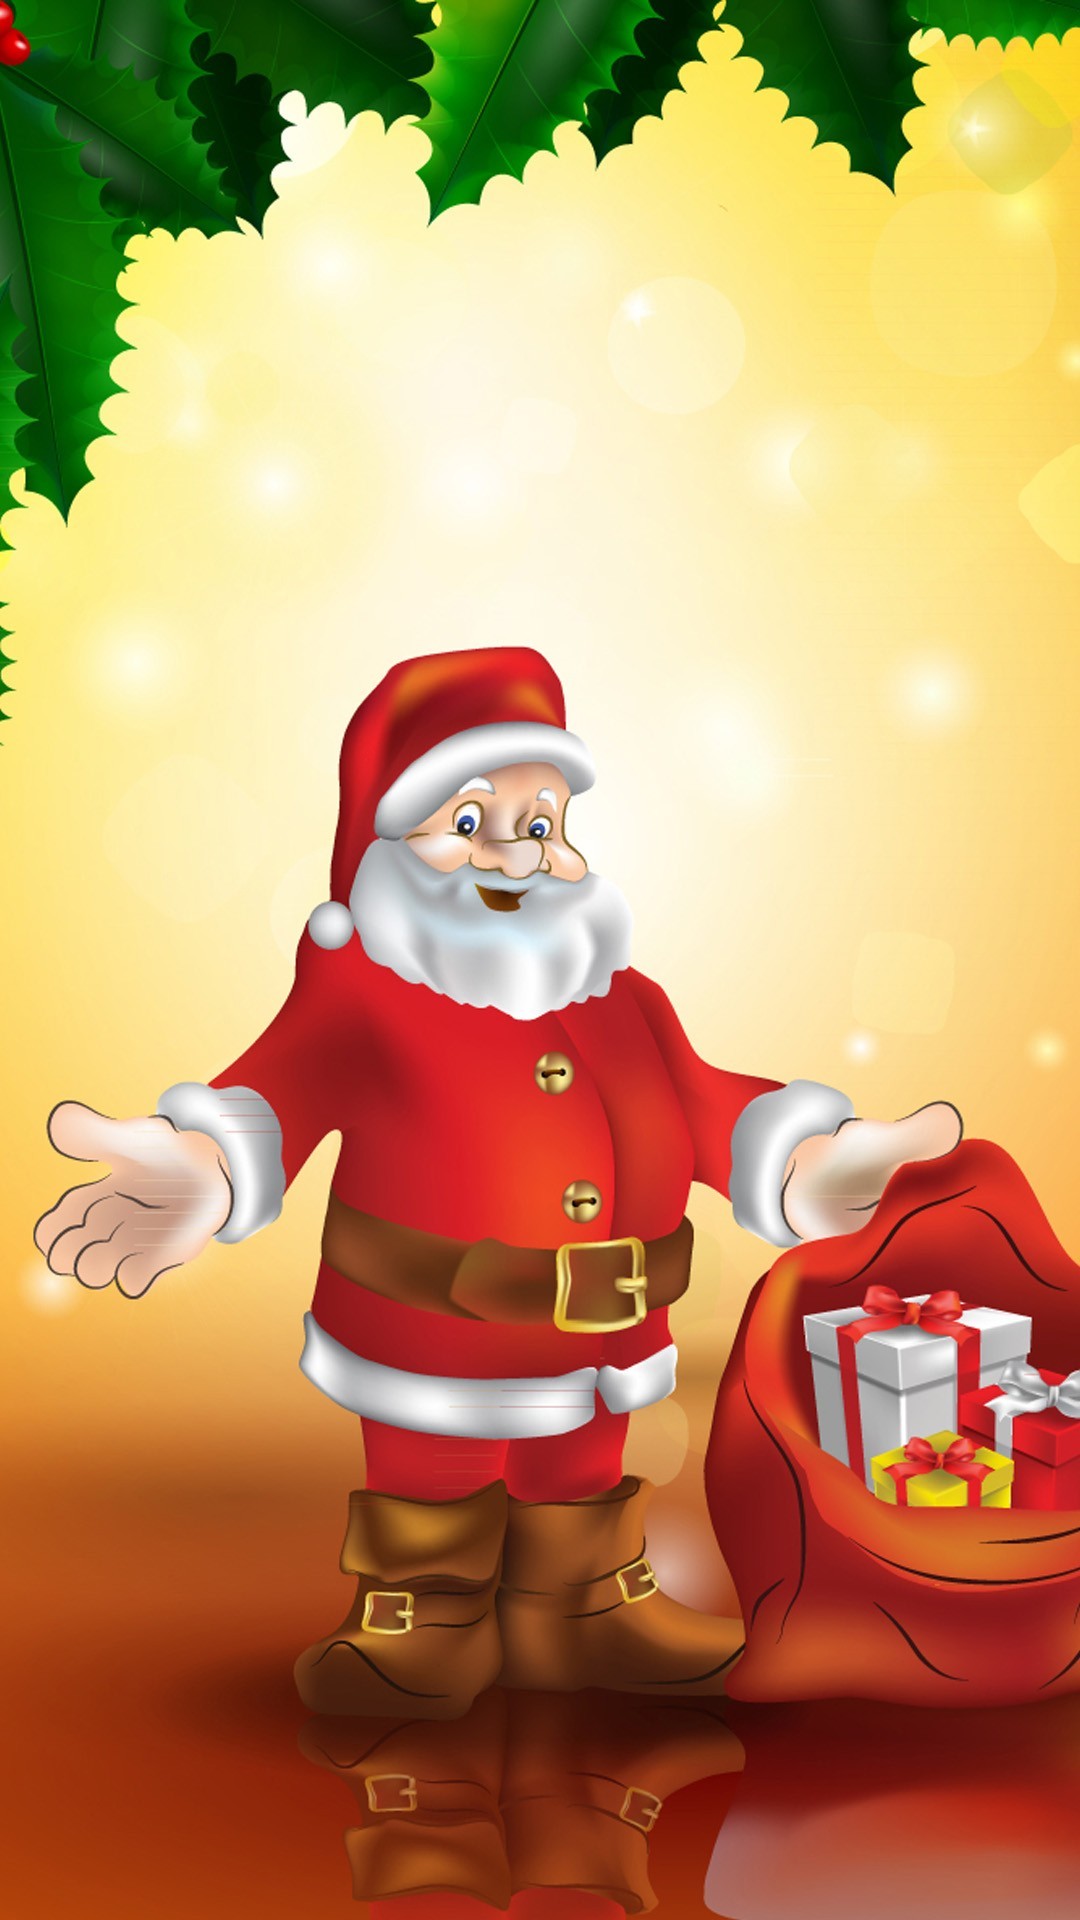 1080x1920 cute Christmas 2015 Santa under the tree iPhone 6 plus wallpaper . ...